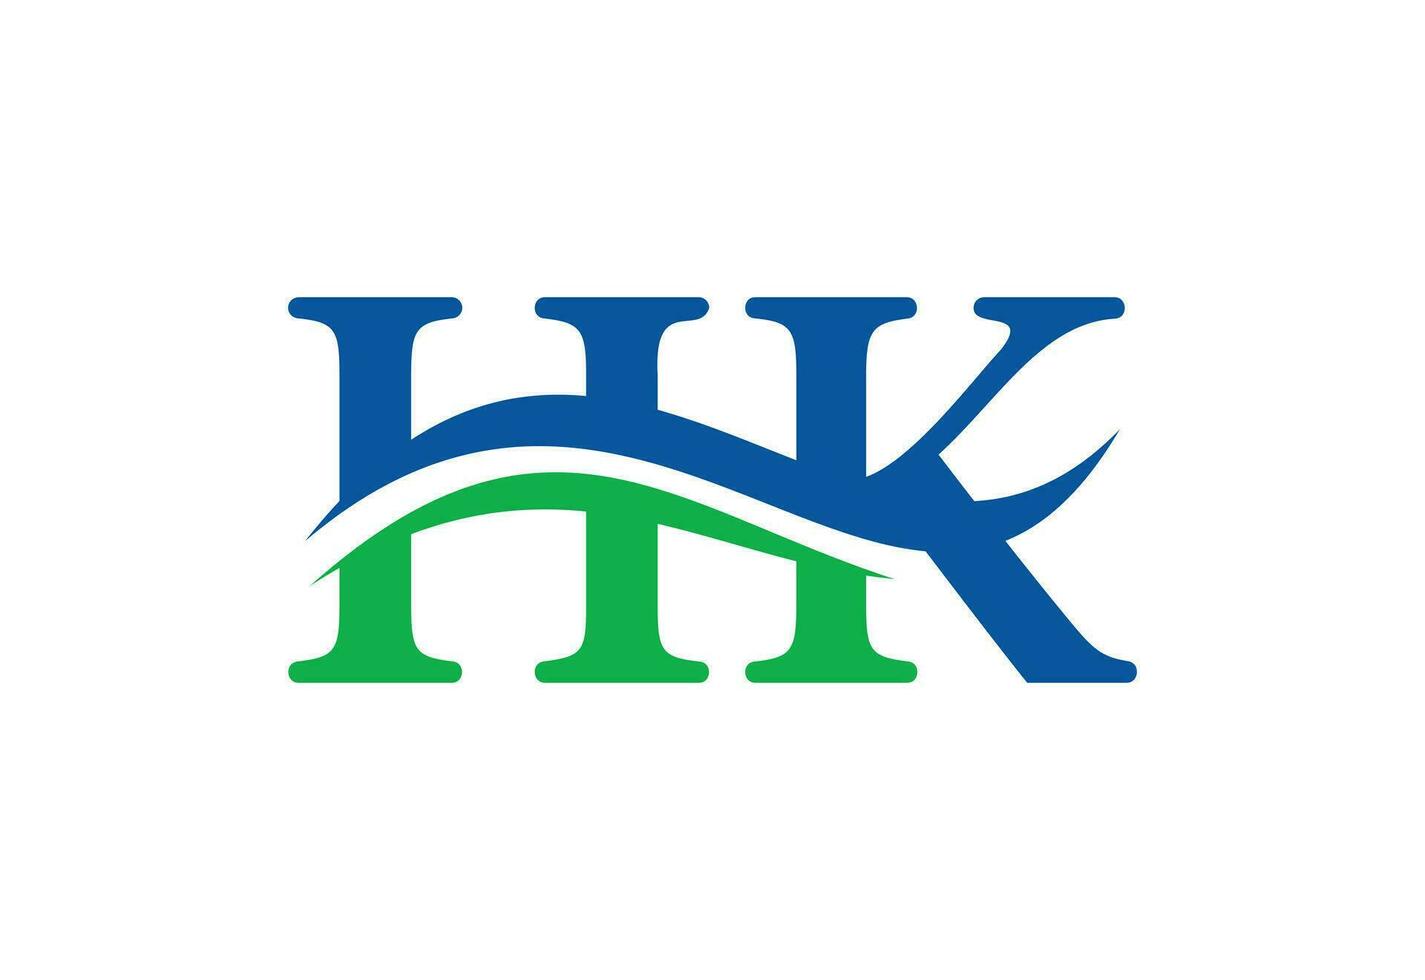 alfabetos hk letra logo diseño con creativo firmar, vector ilustración